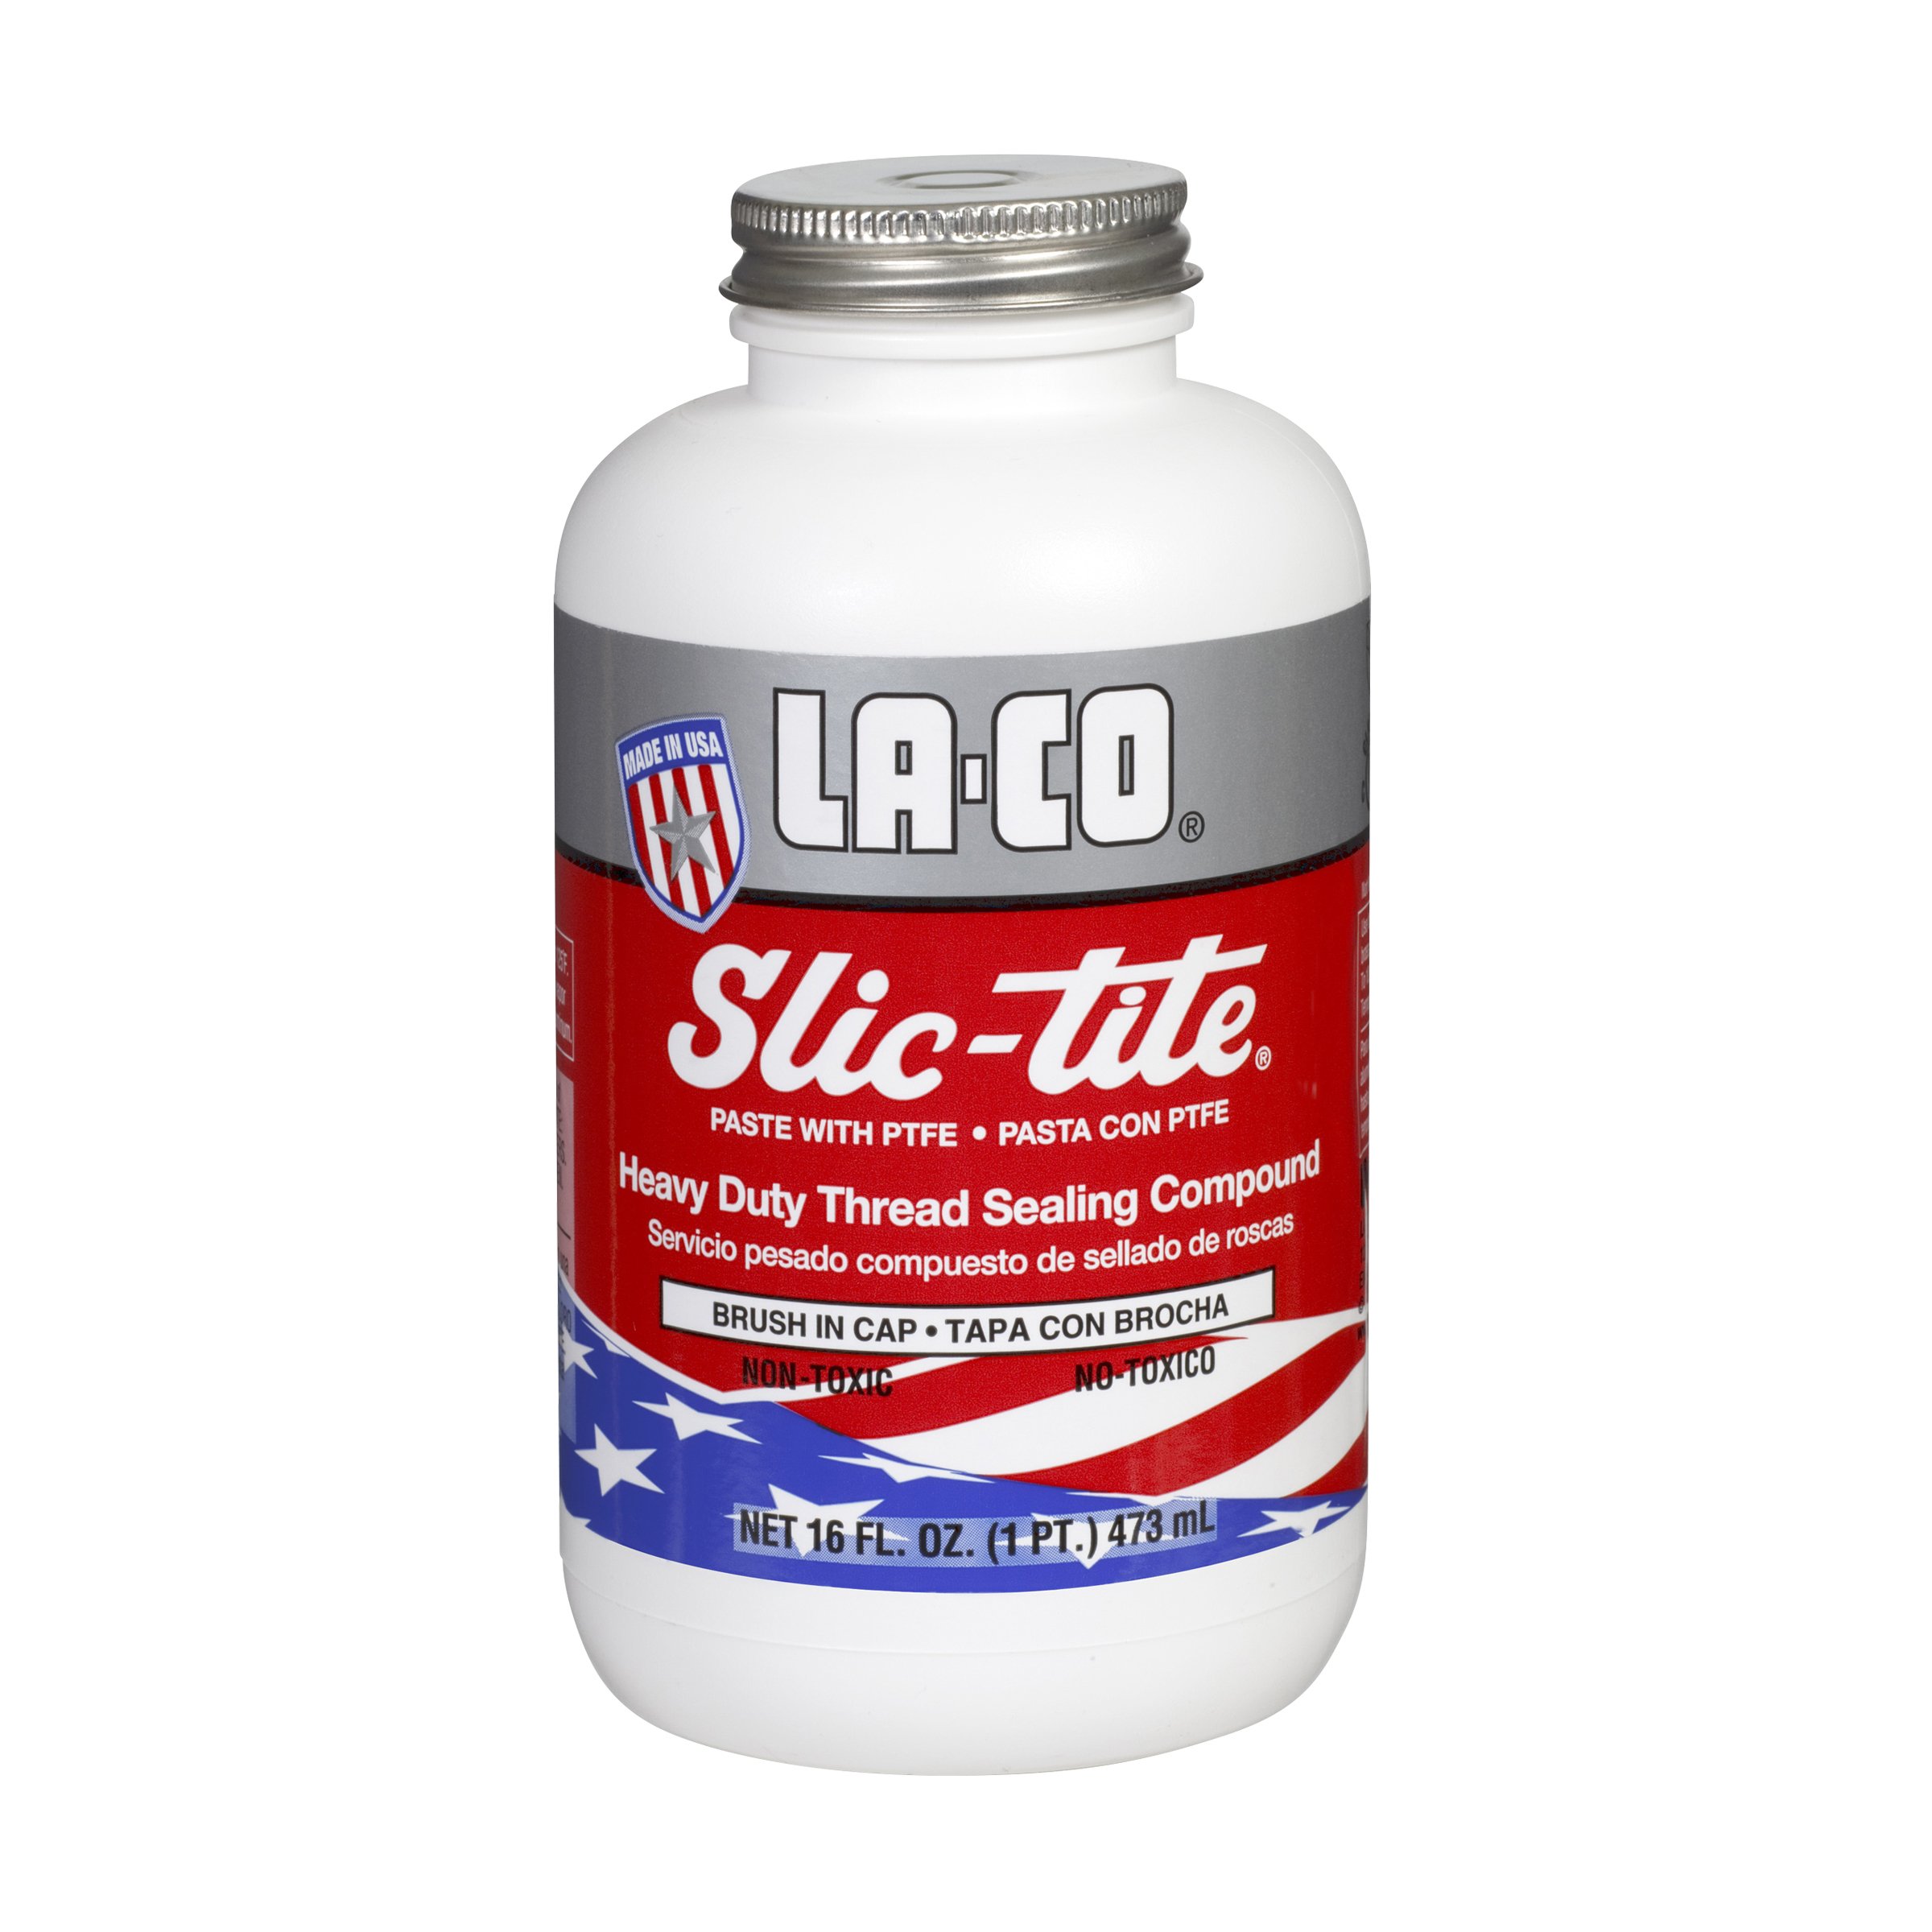 LA-cO 42029 Slic-Tite Premium Thread Sealant Paste with PTFE, -50 to 500 Degree F Temperature, 1 pint Brush-N-cap Jar